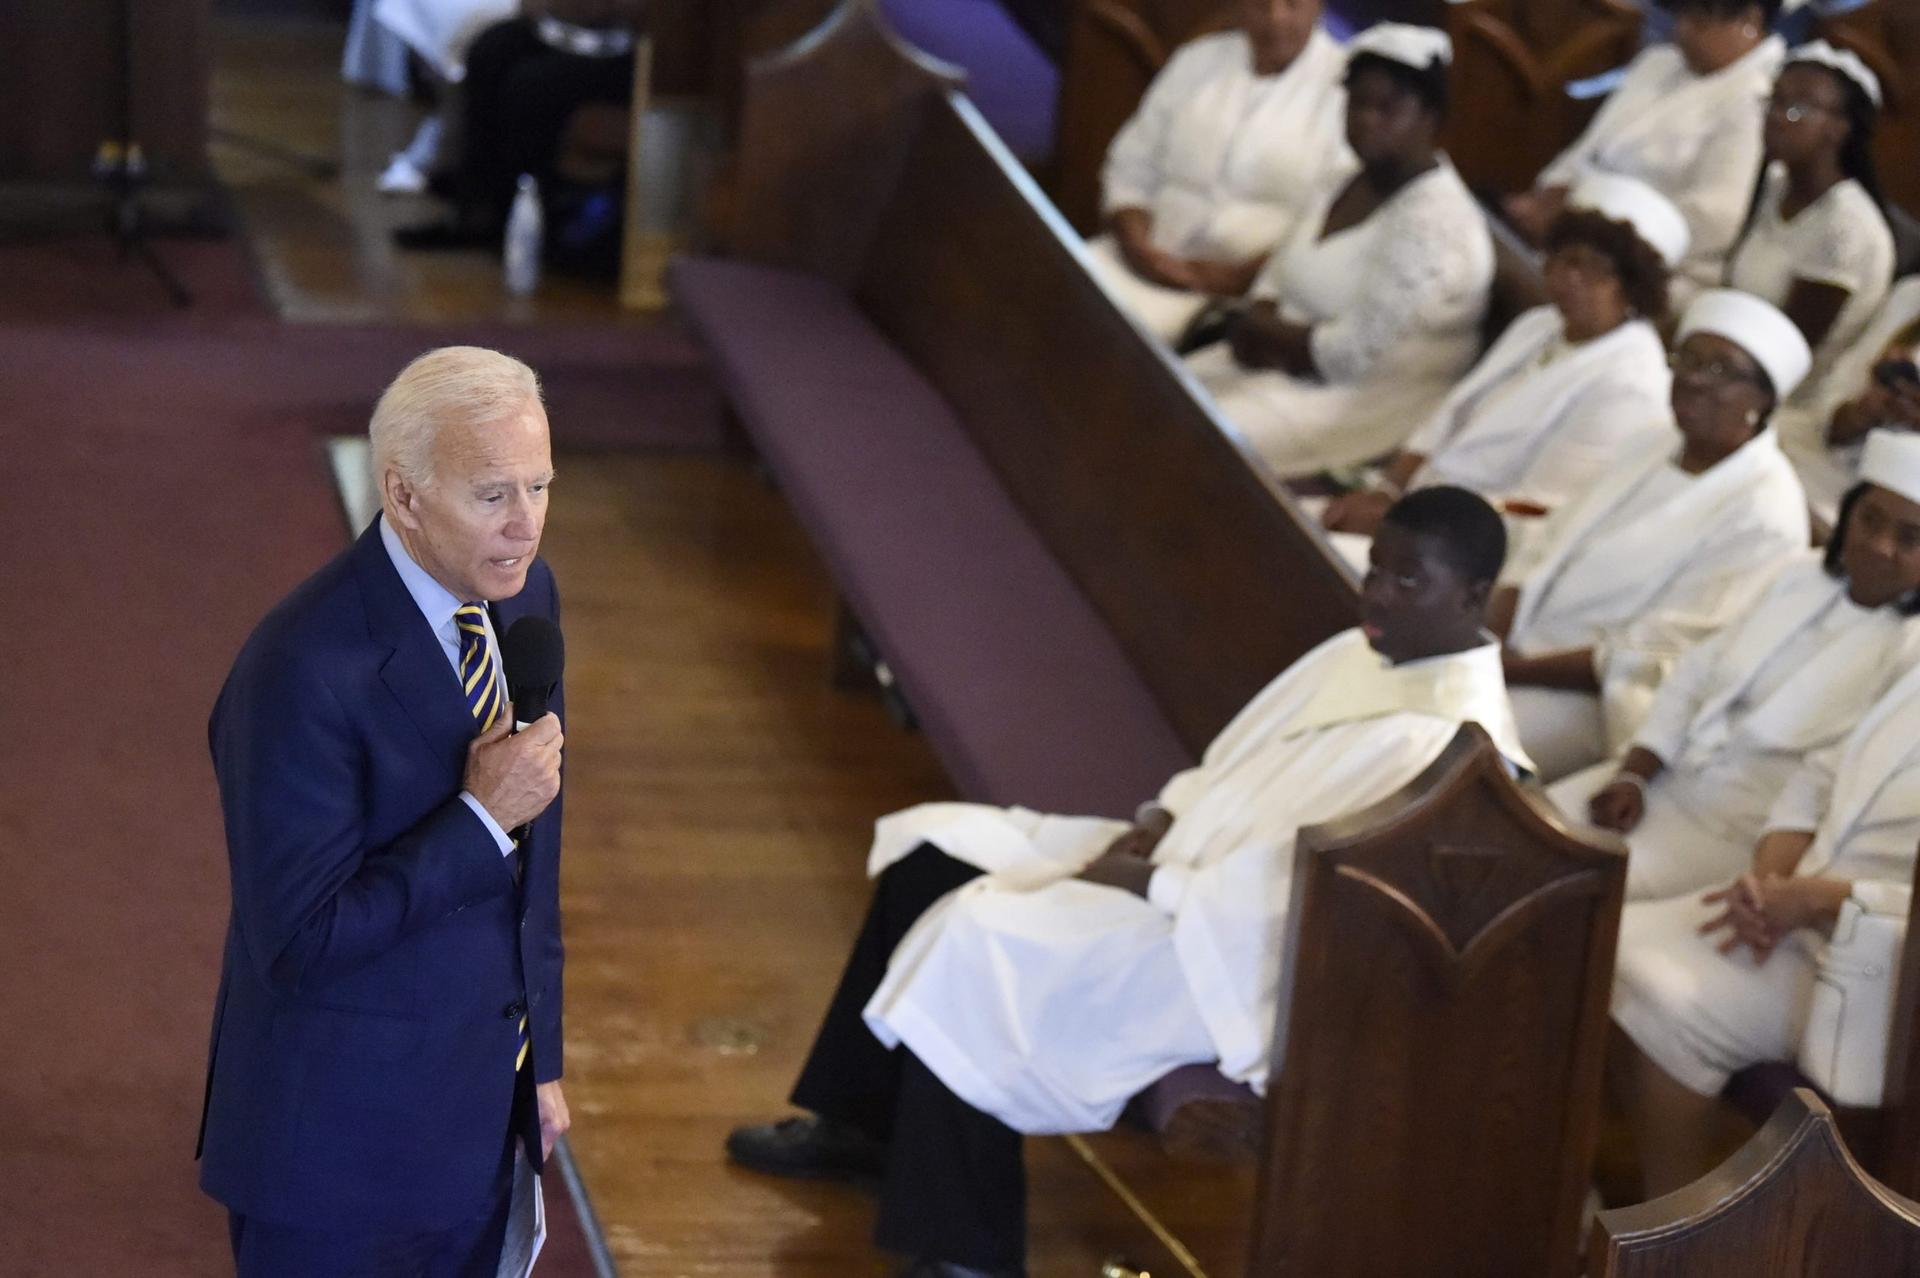 Biden’s communion denial highlights faith-politics conflict